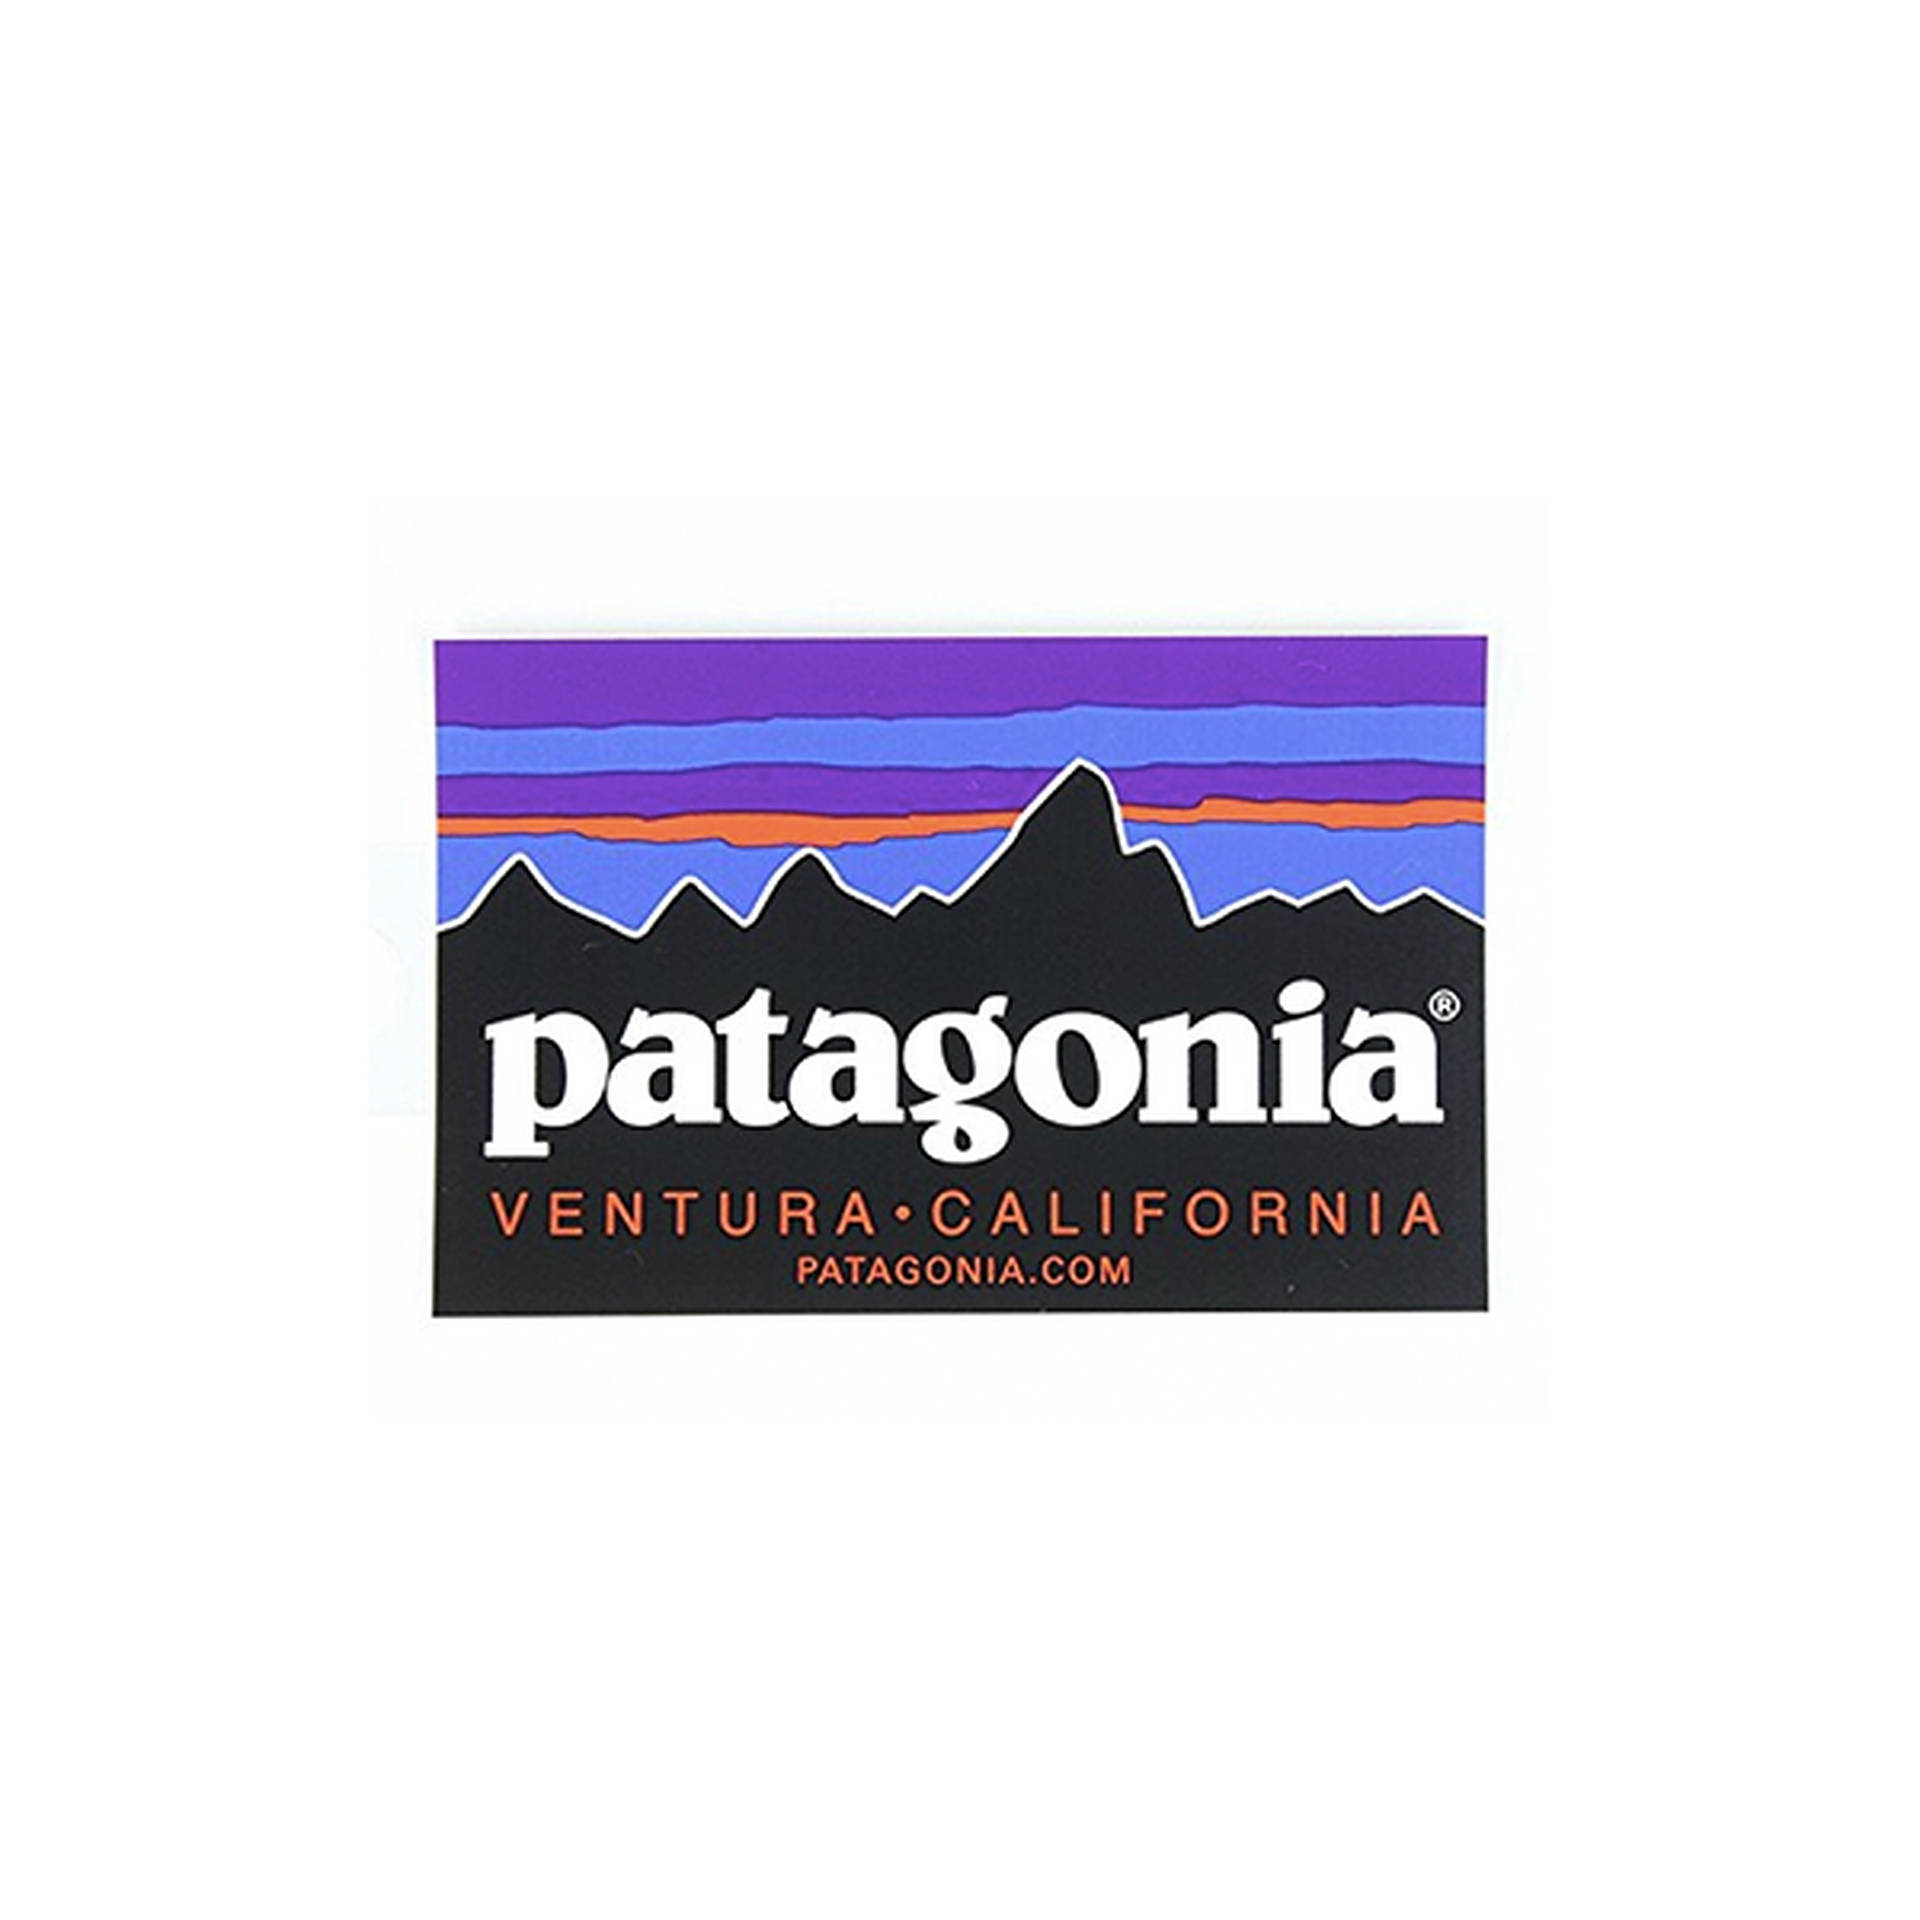 Patagonia Logo With A Scenic Mountain Range Backdrop